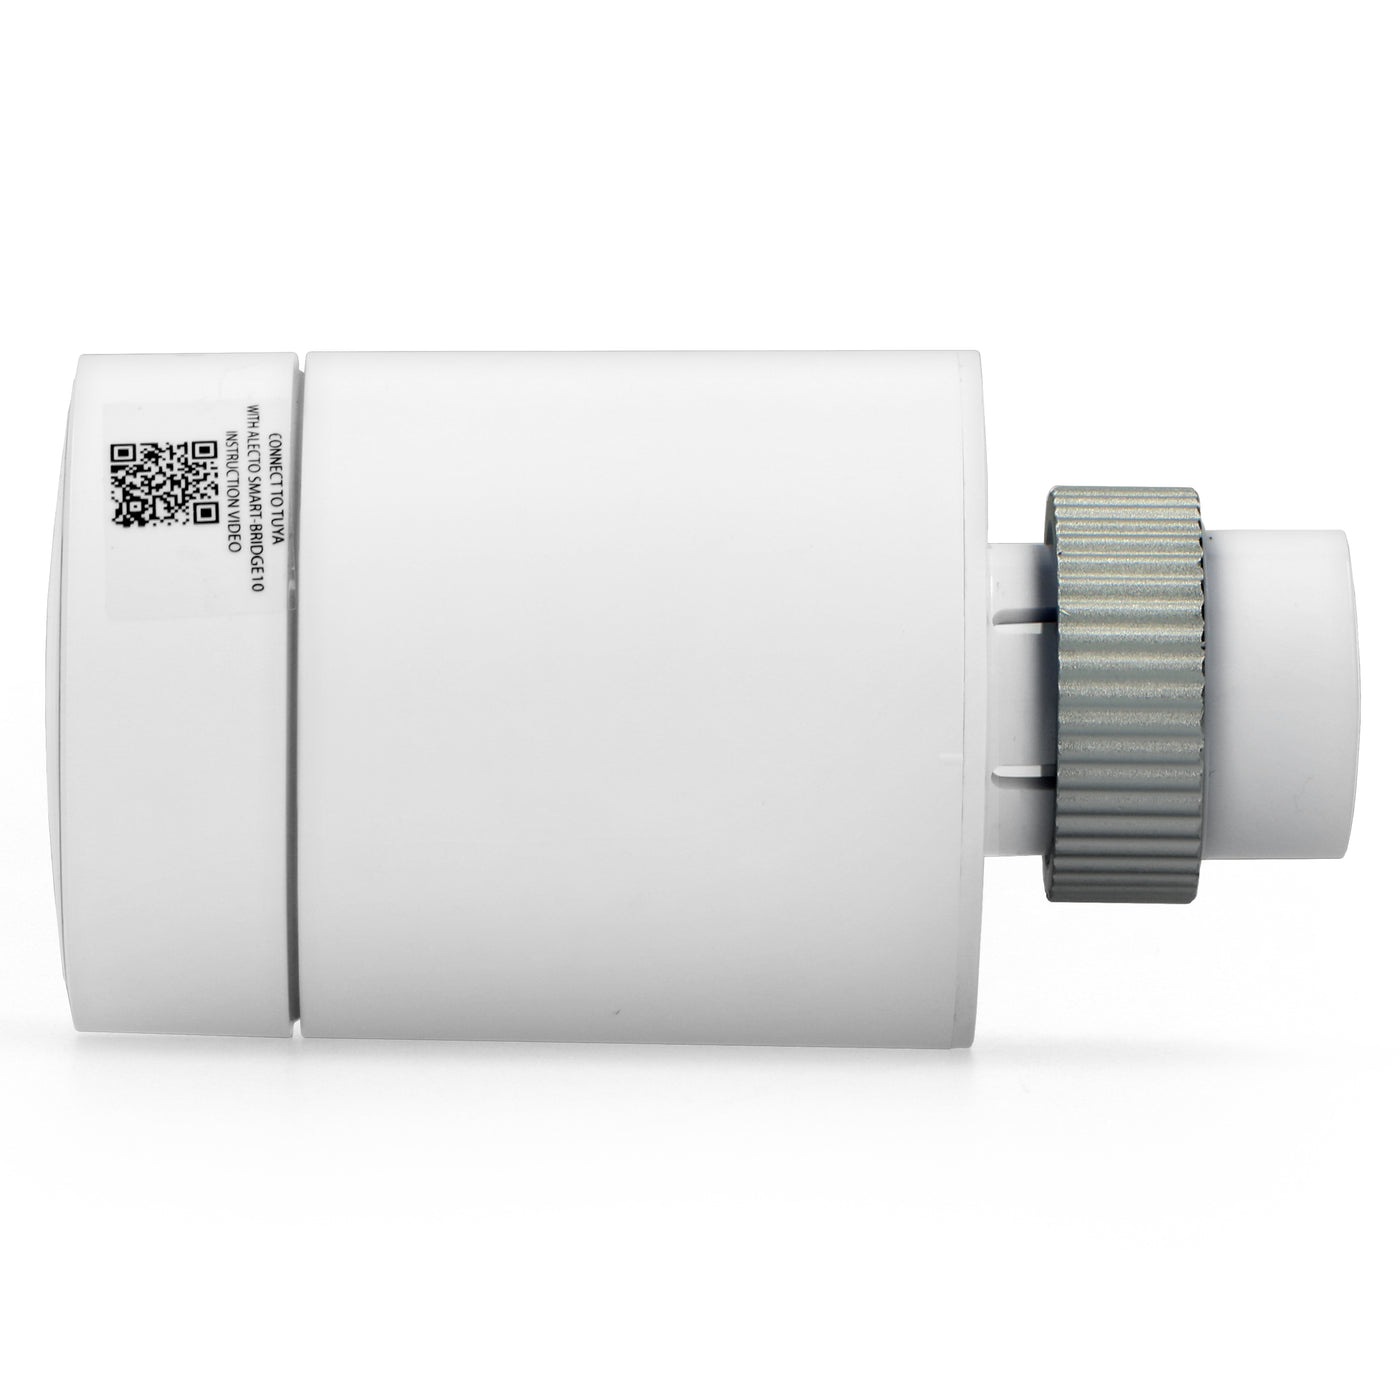 Alecto SMART-HEAT10 - Smart Zigbee Heizkörper-Thermostat